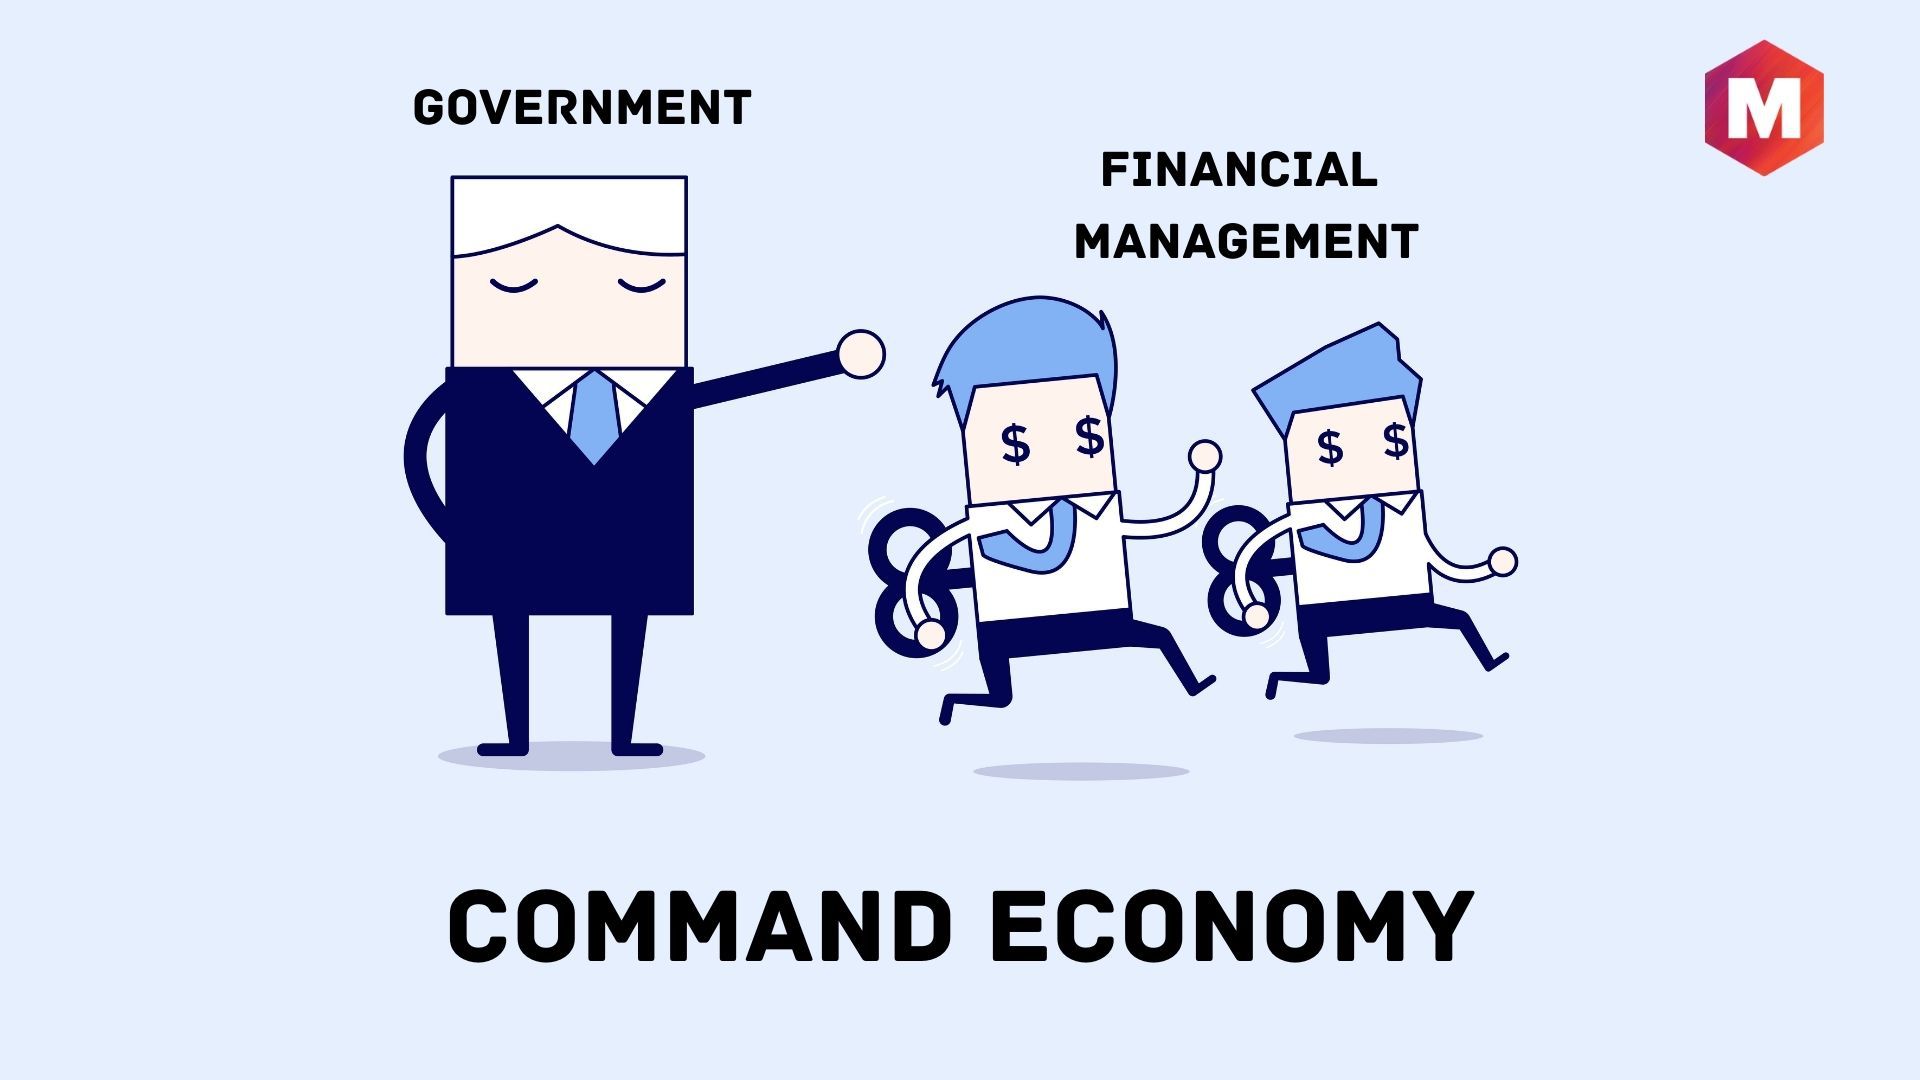 Command Economy - Definition, Advantages and Disadvantages | Marketing91